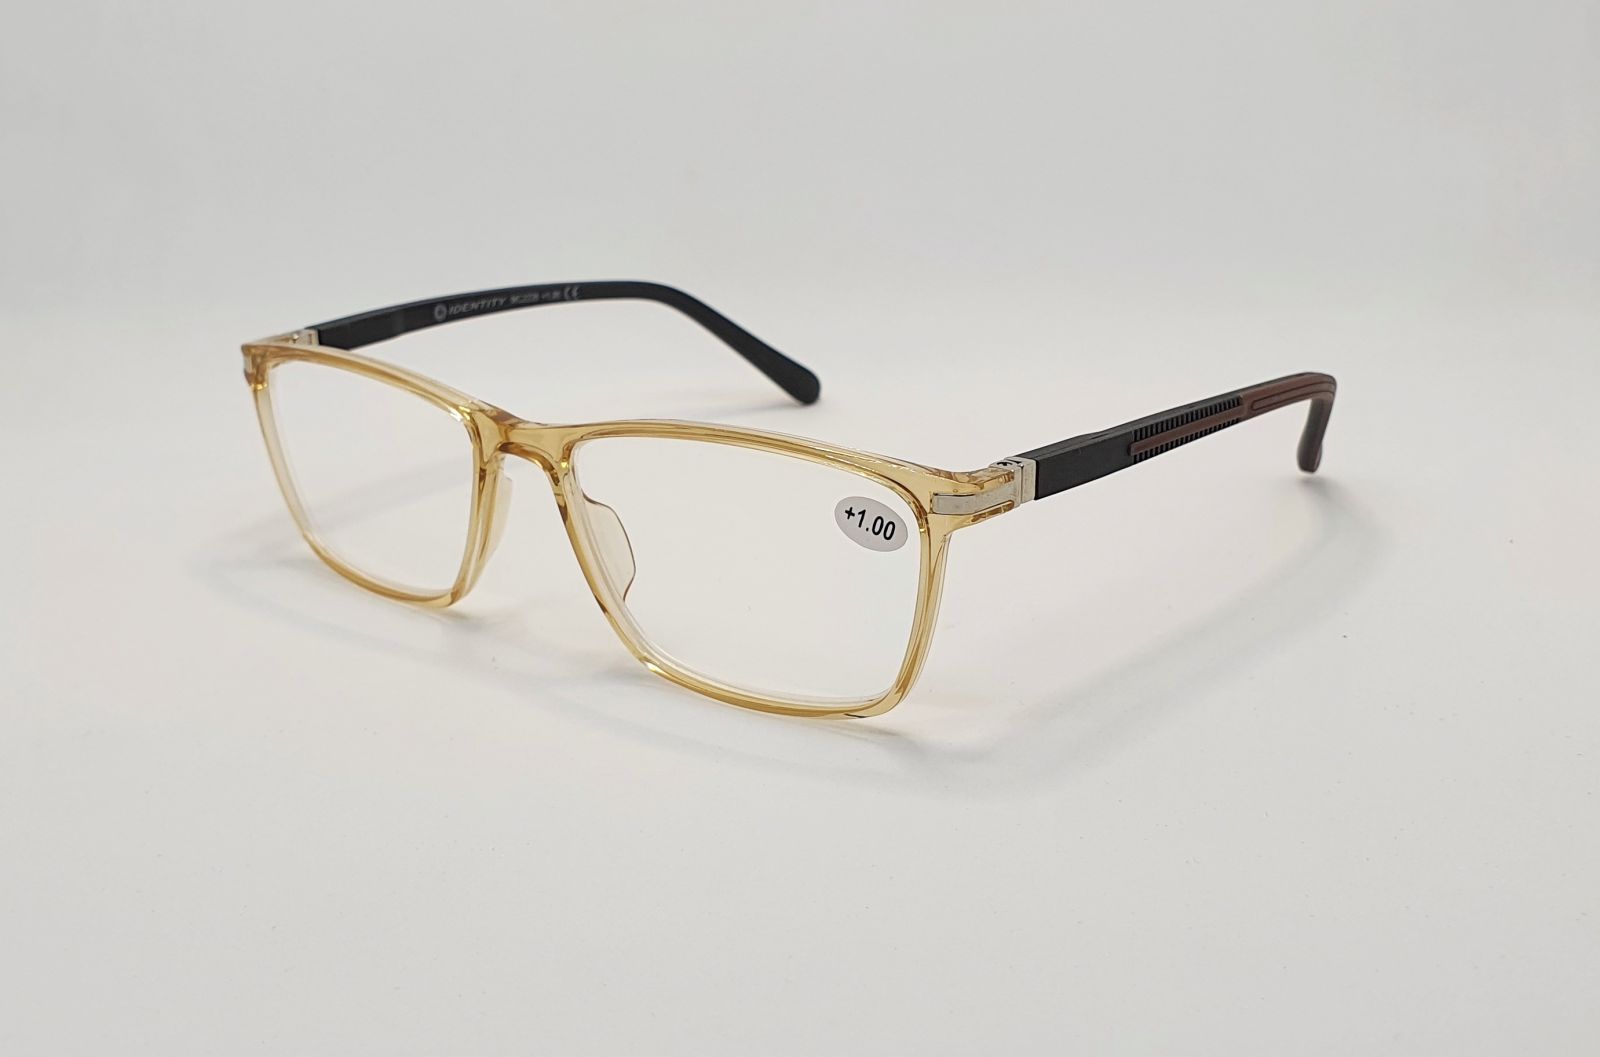 Dioptrické brýle MC2228 +2,00 flex yellow